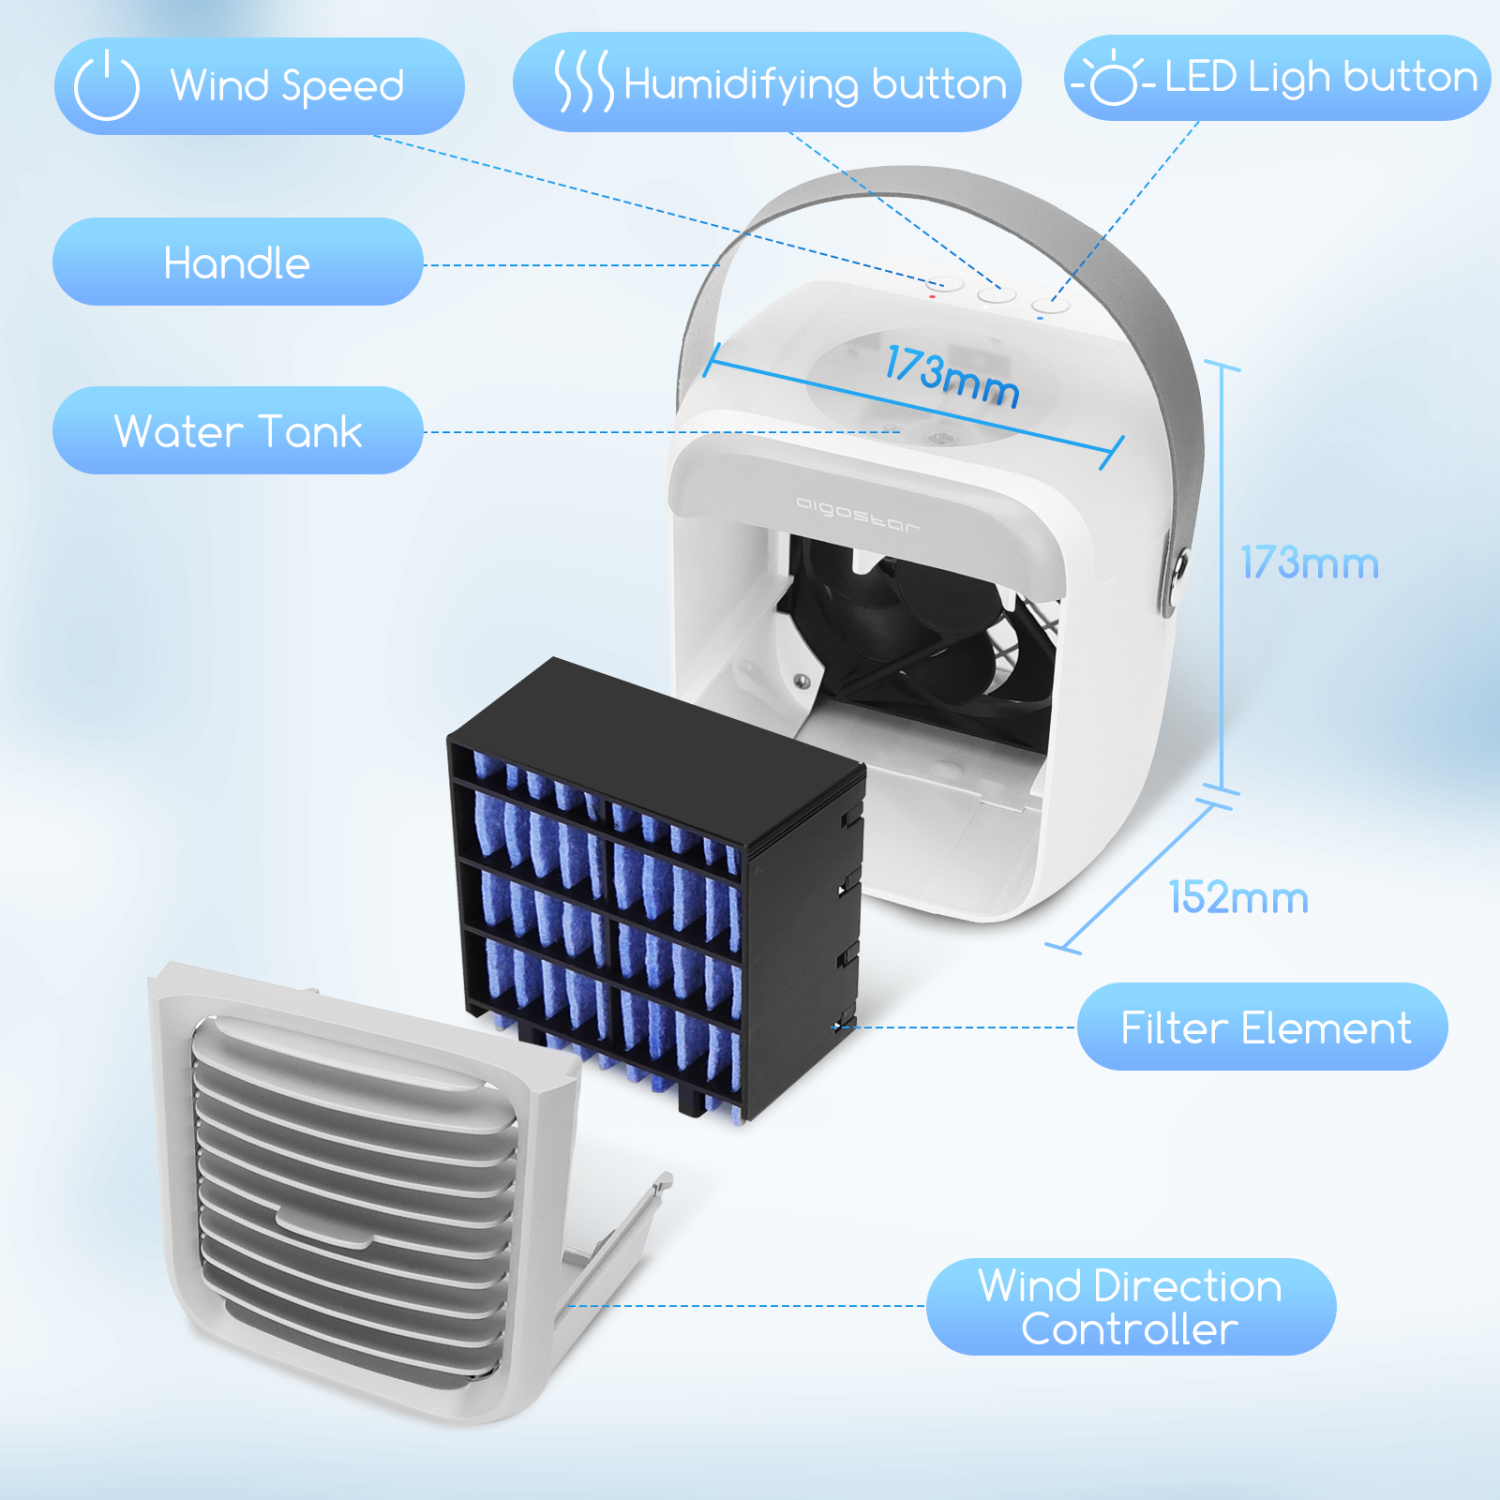 Aigostar Ice Cube - Ventilador humidificador portátil, sin cables. Depósito de 300ml, 3 velocidades, 2 modos de uso. Lámpara LED 7 colores, luz nocturna. Asa de transporte.  Diseño mini, compacto.